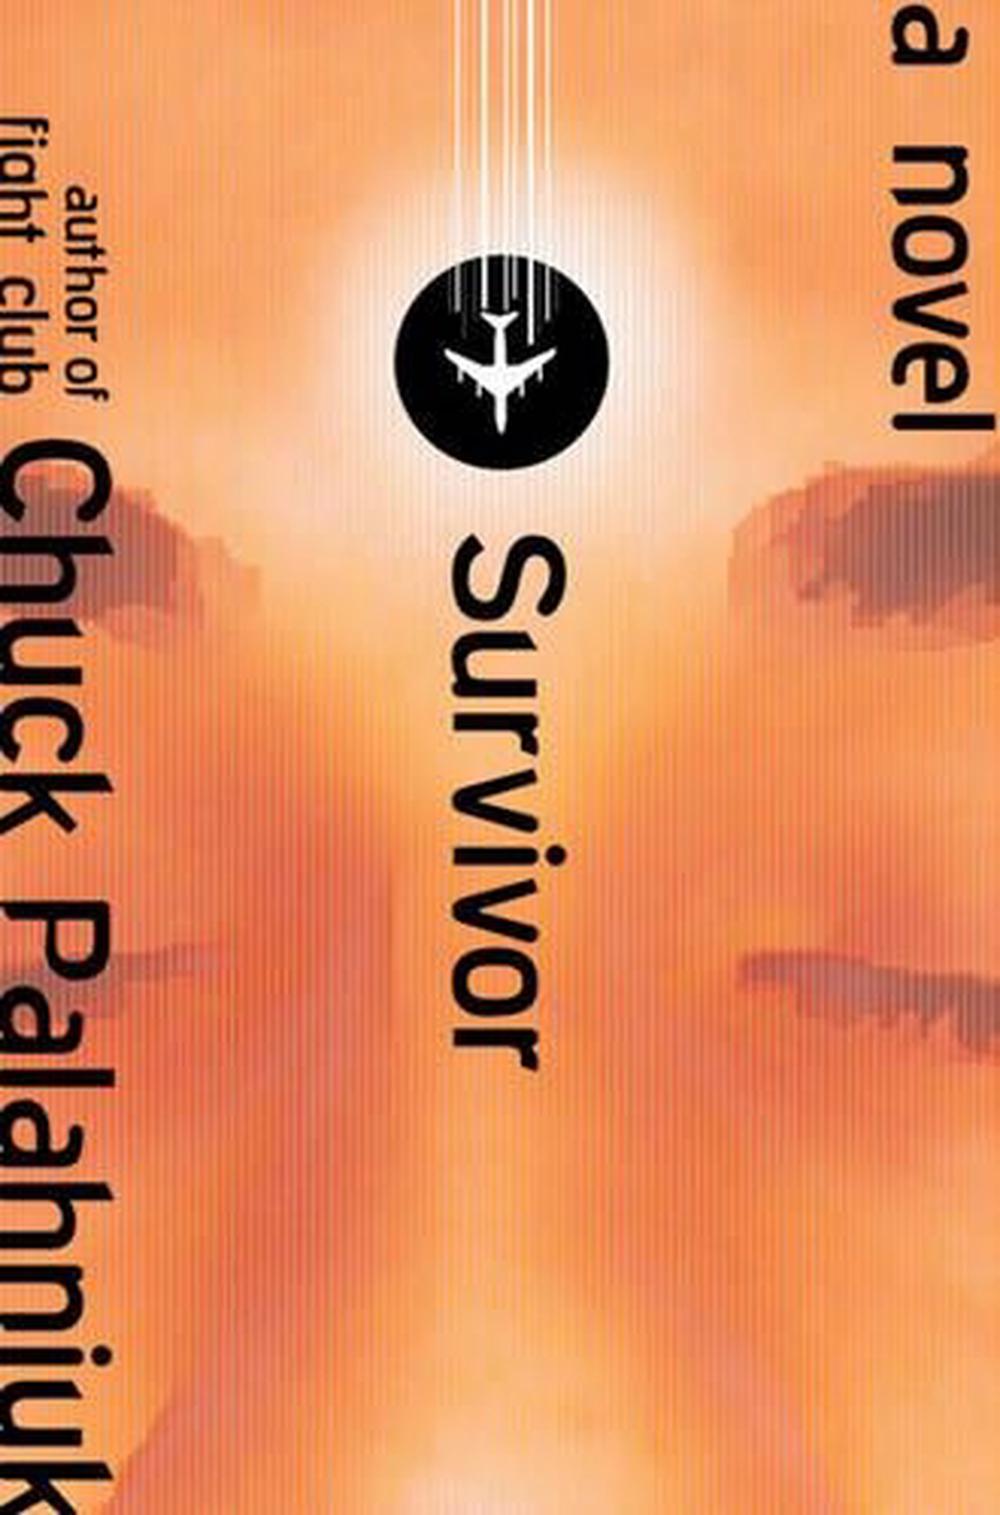 Chuck Palahniuk: Survivor (2018, W. W. Norton & Company)